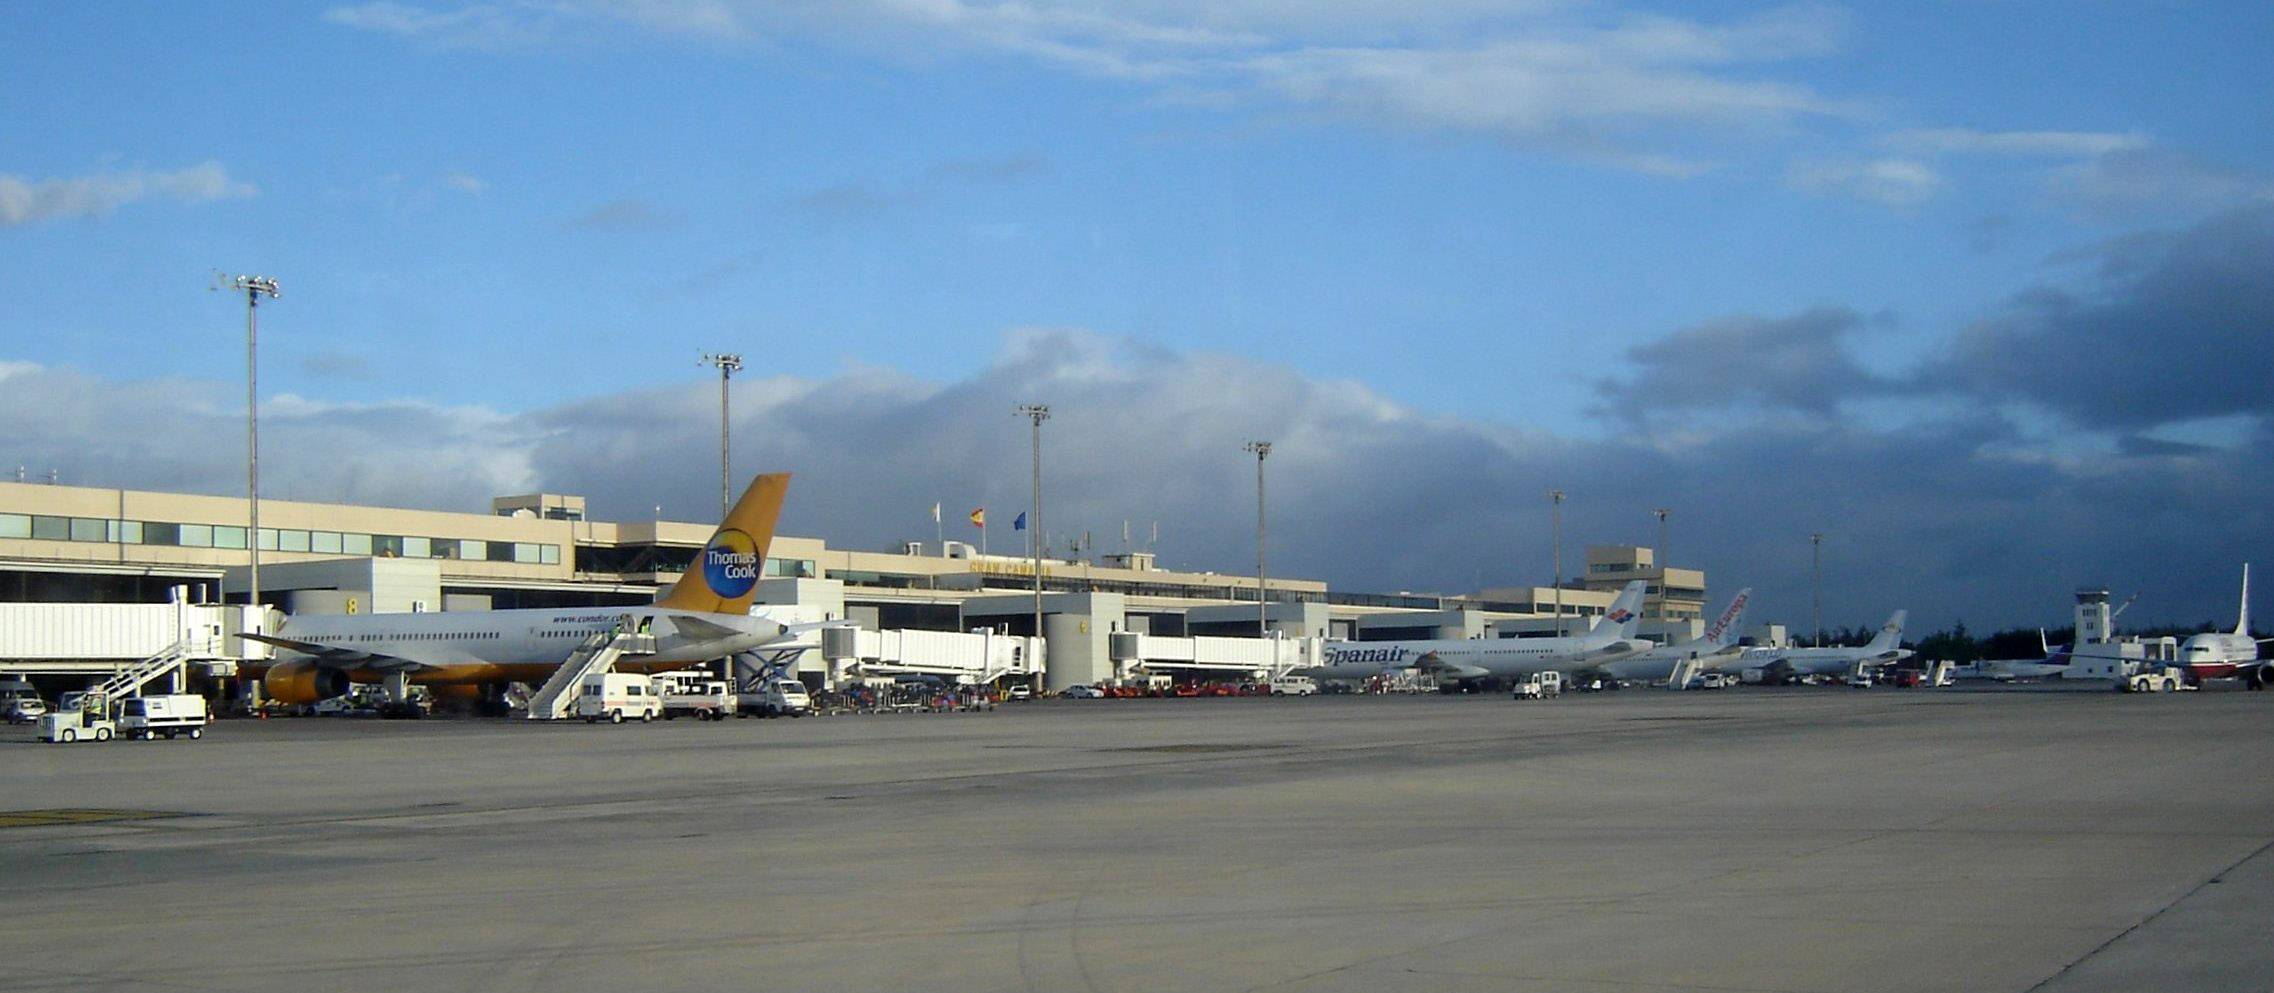 Аэропорт гран-канария (gran canaria), лас-пальмас-де-гран-канария, заказ авиабилетов